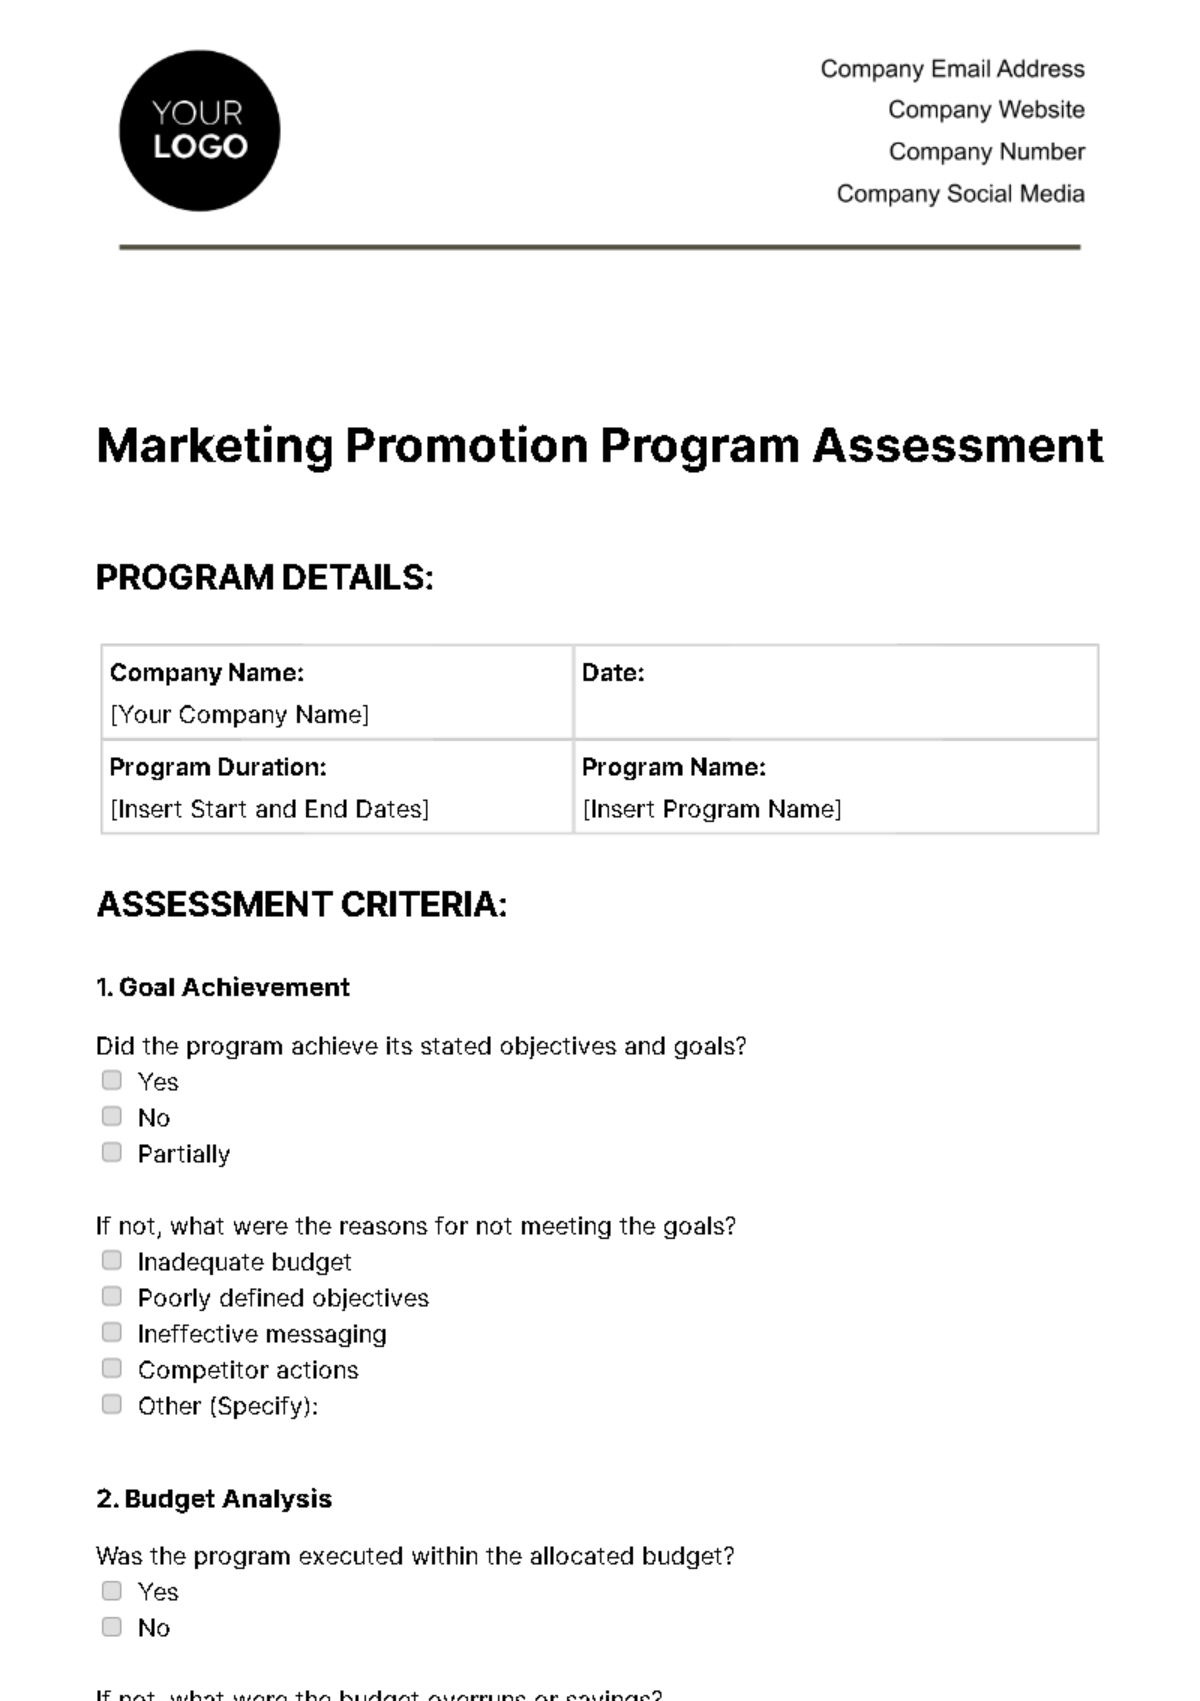 Marketing Promotion Program Assessment Template